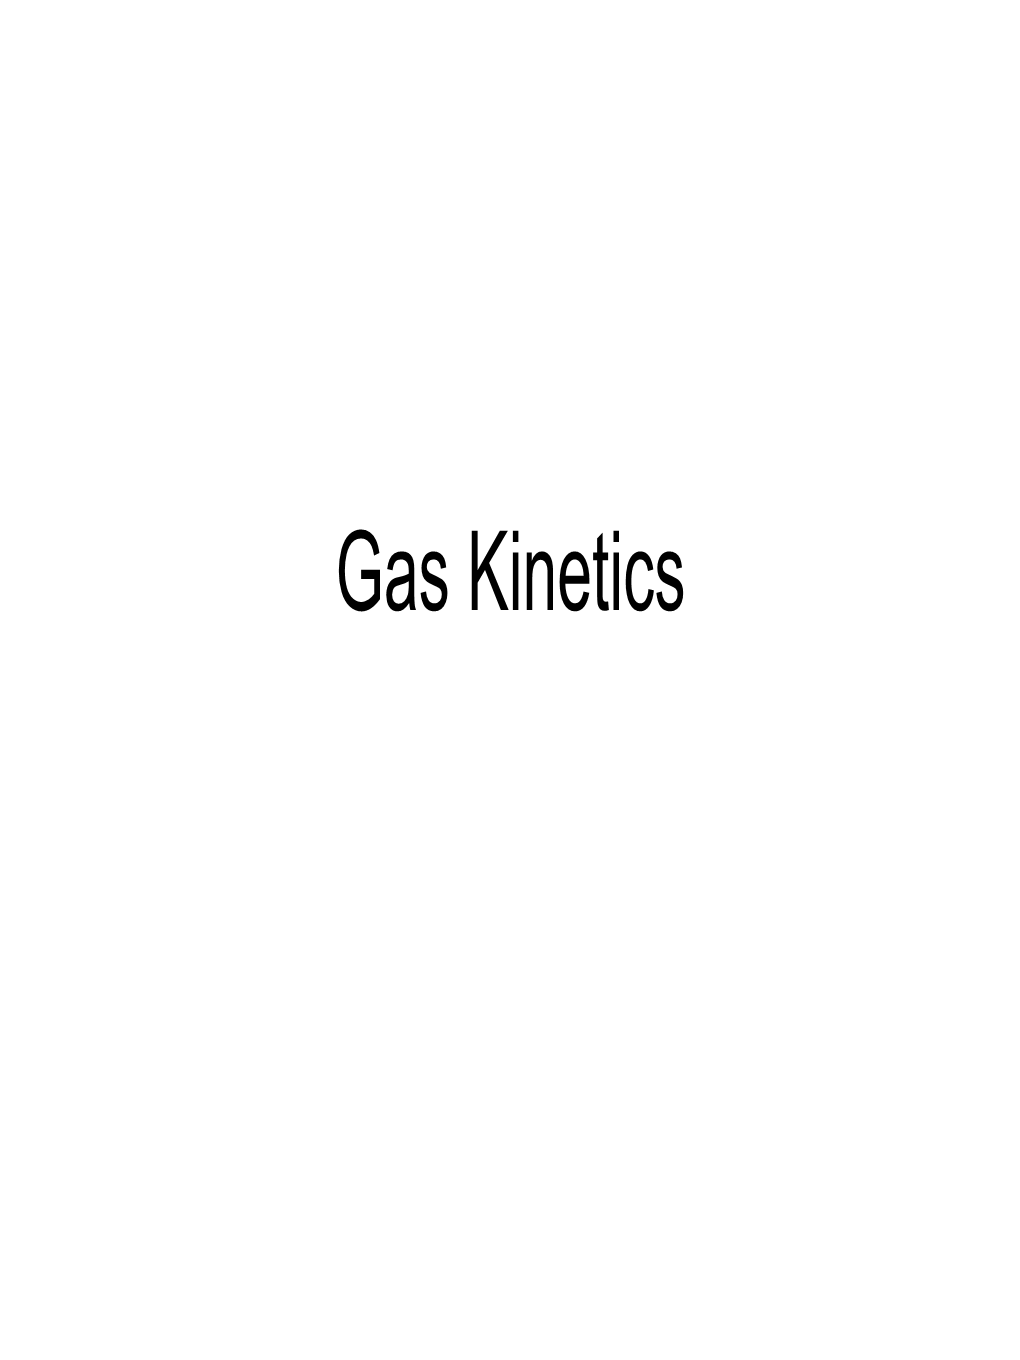 Gas Kinetics Introduction